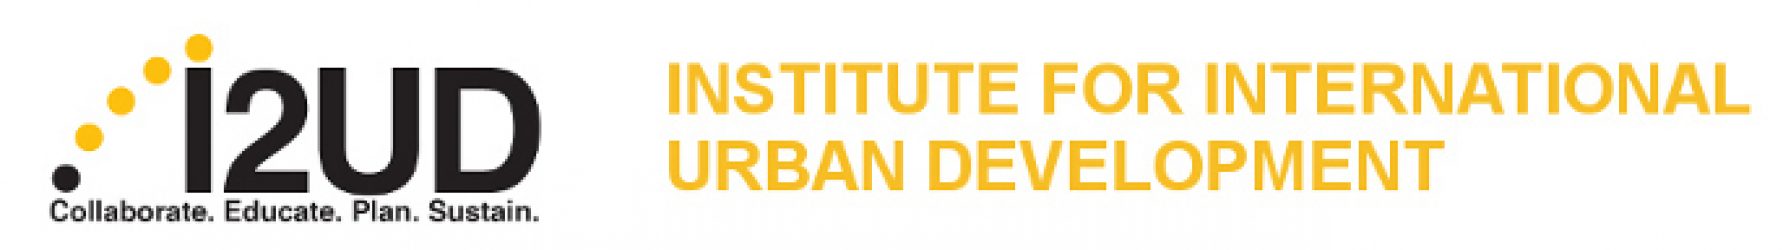 The Institute for International Urban Development